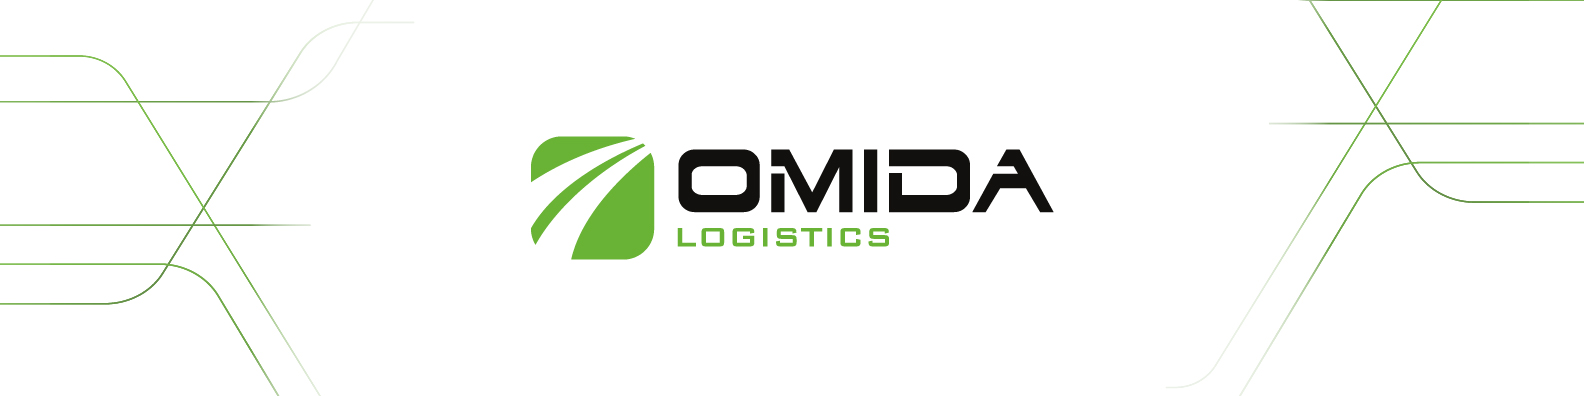 Tło-Omida-Logistics